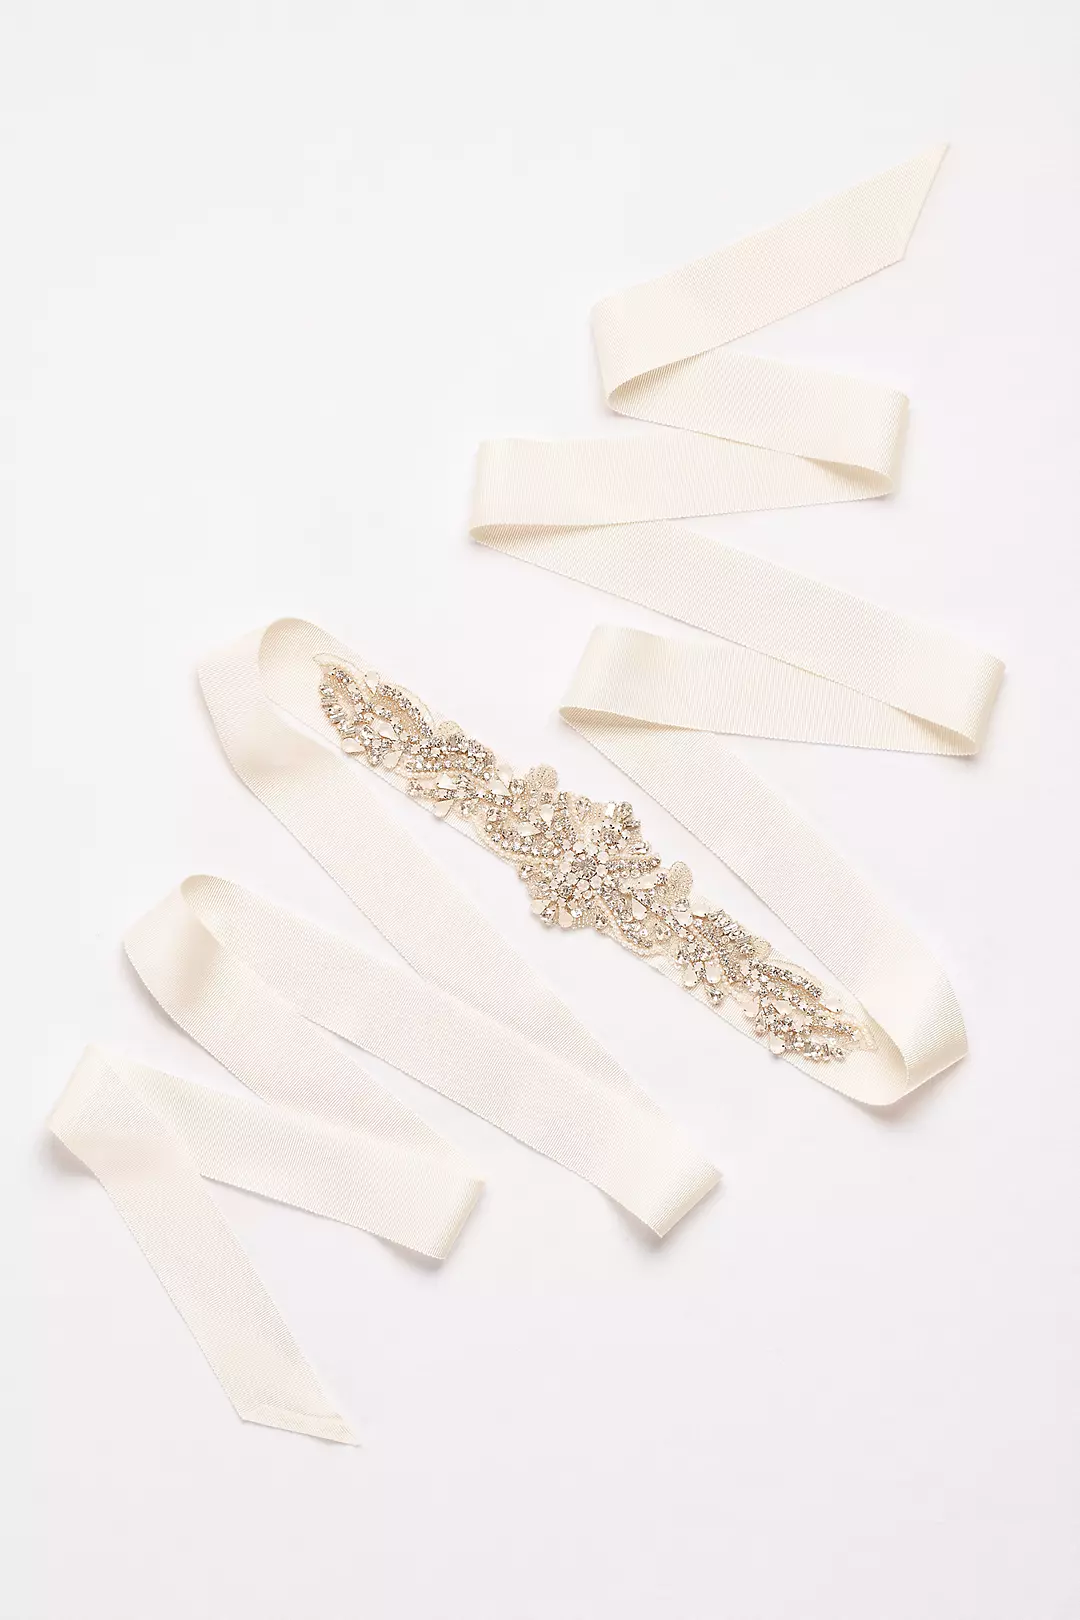 Crystal and Pearl Grosgrain Ribbon Sash Image